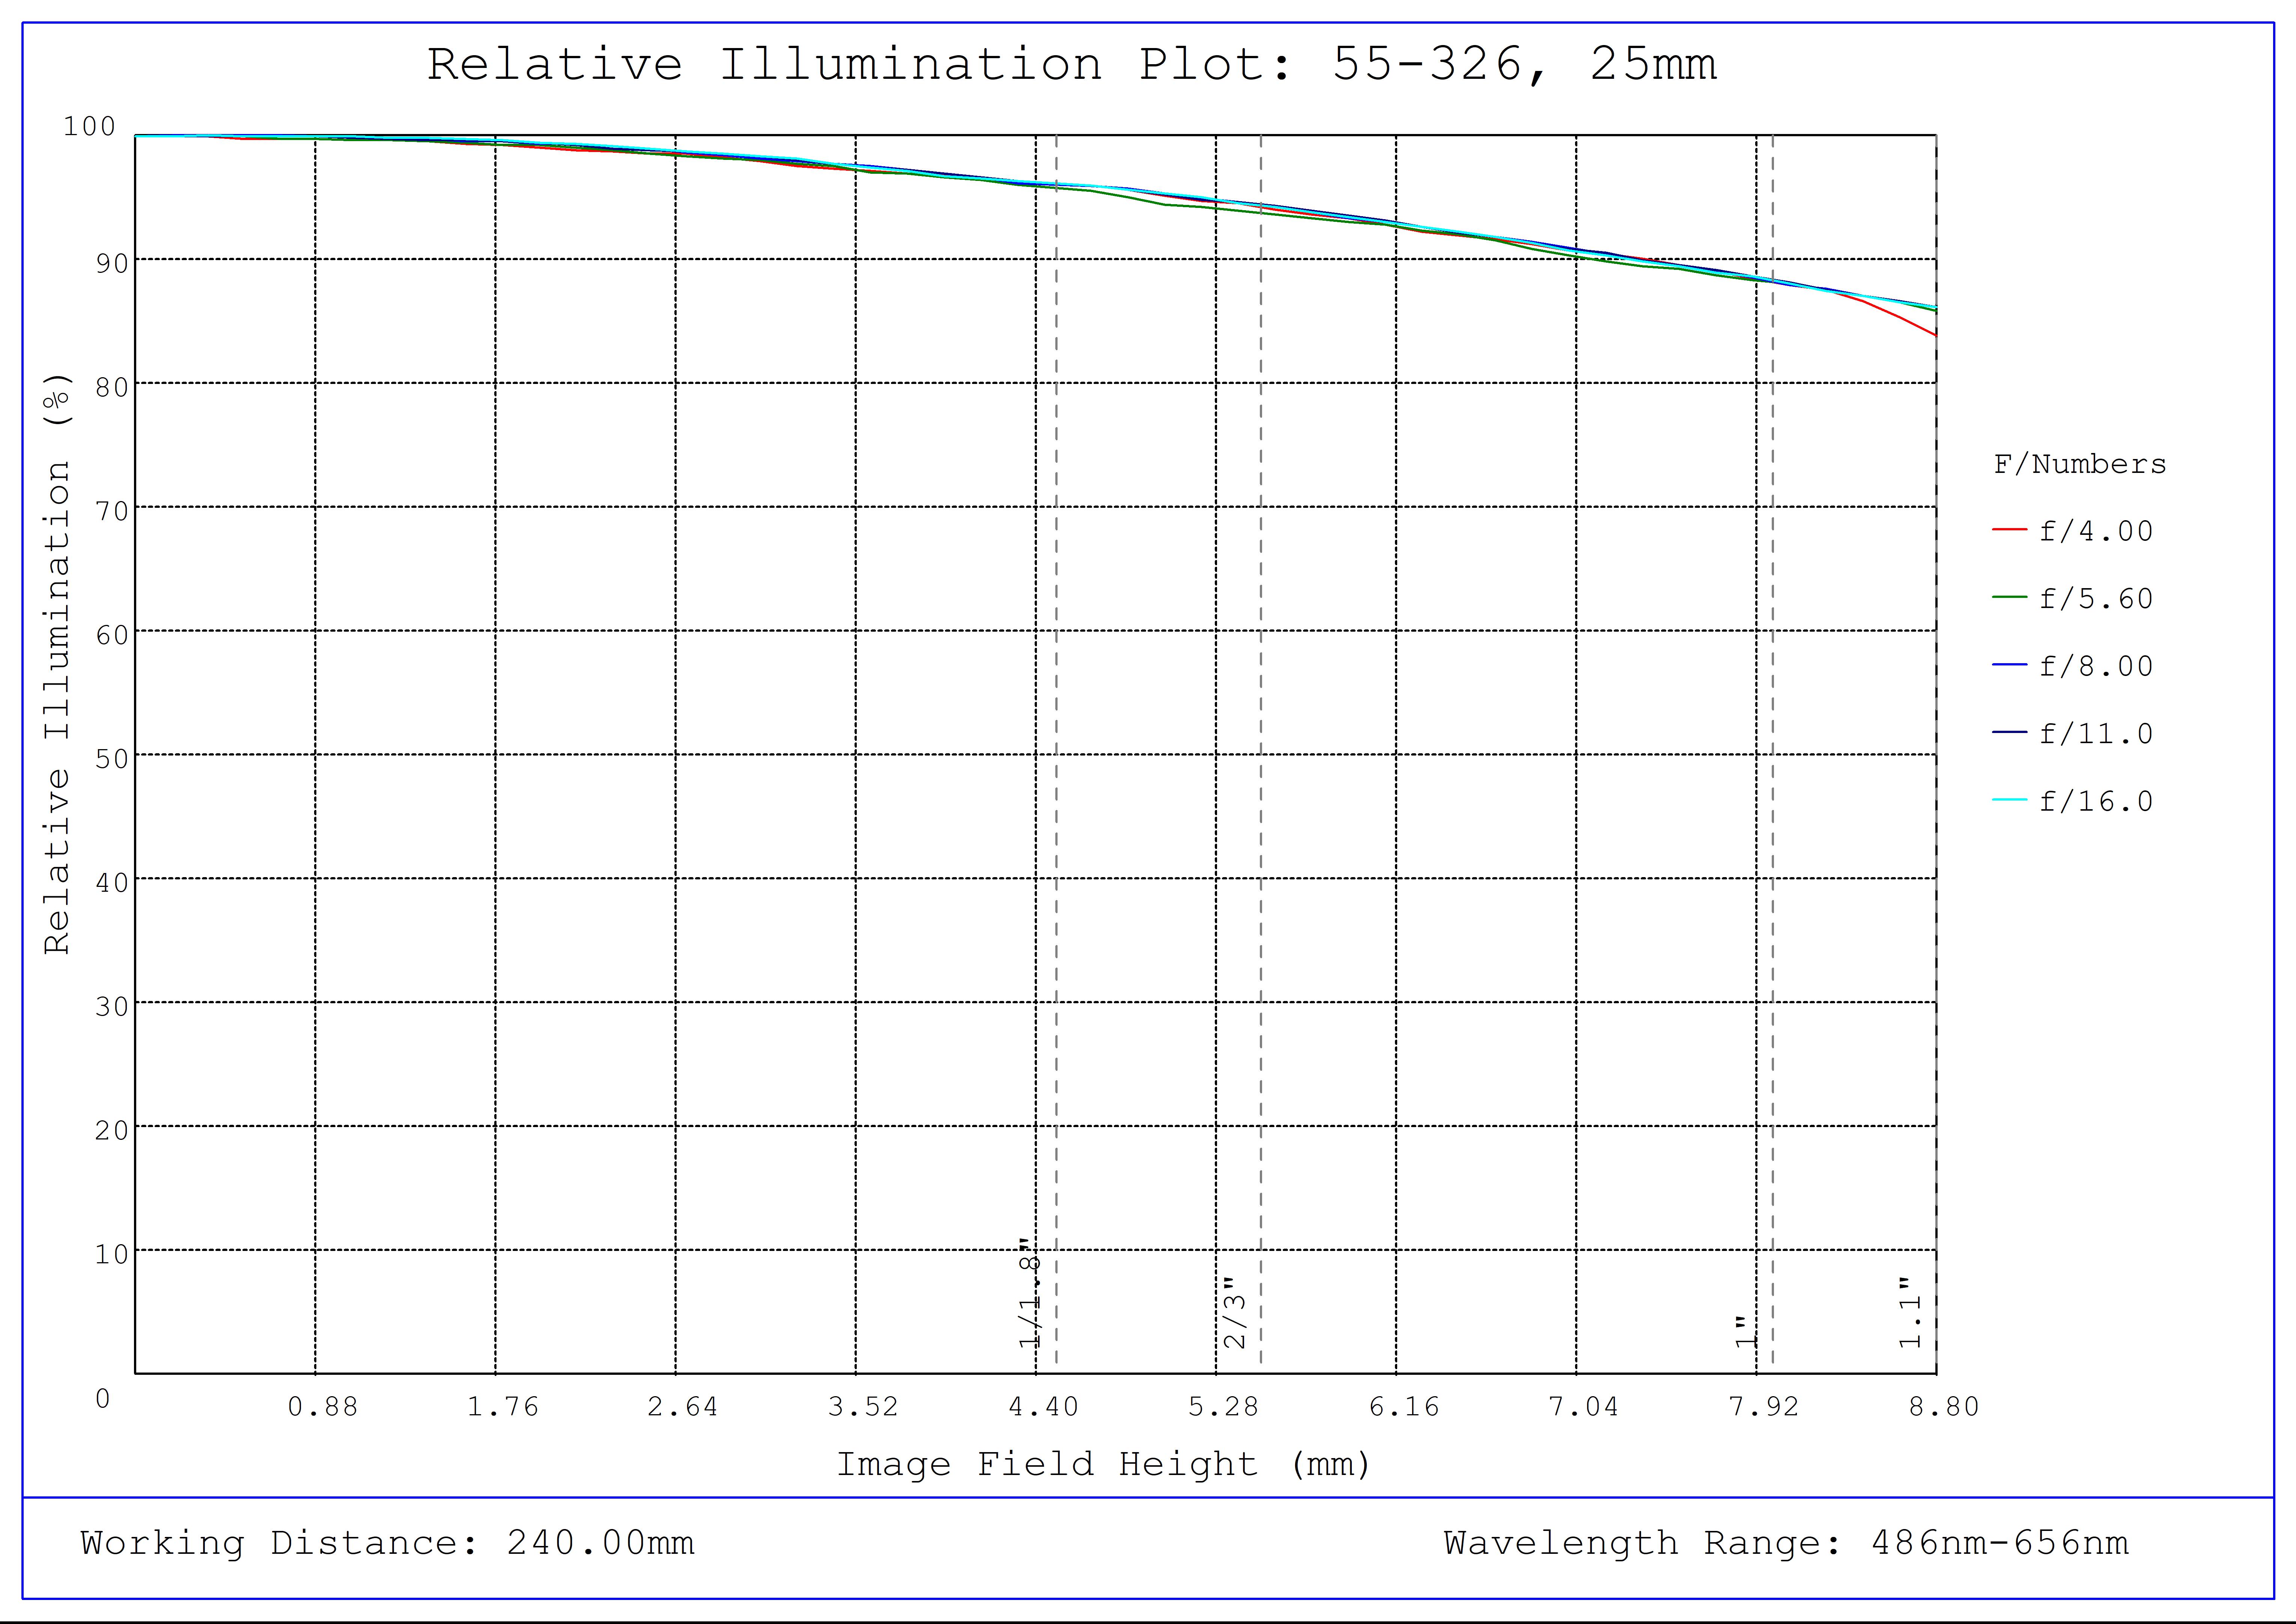 #55-326, 25mm DG Series Fixed Focal Length Lens, Relative Illumination Plot